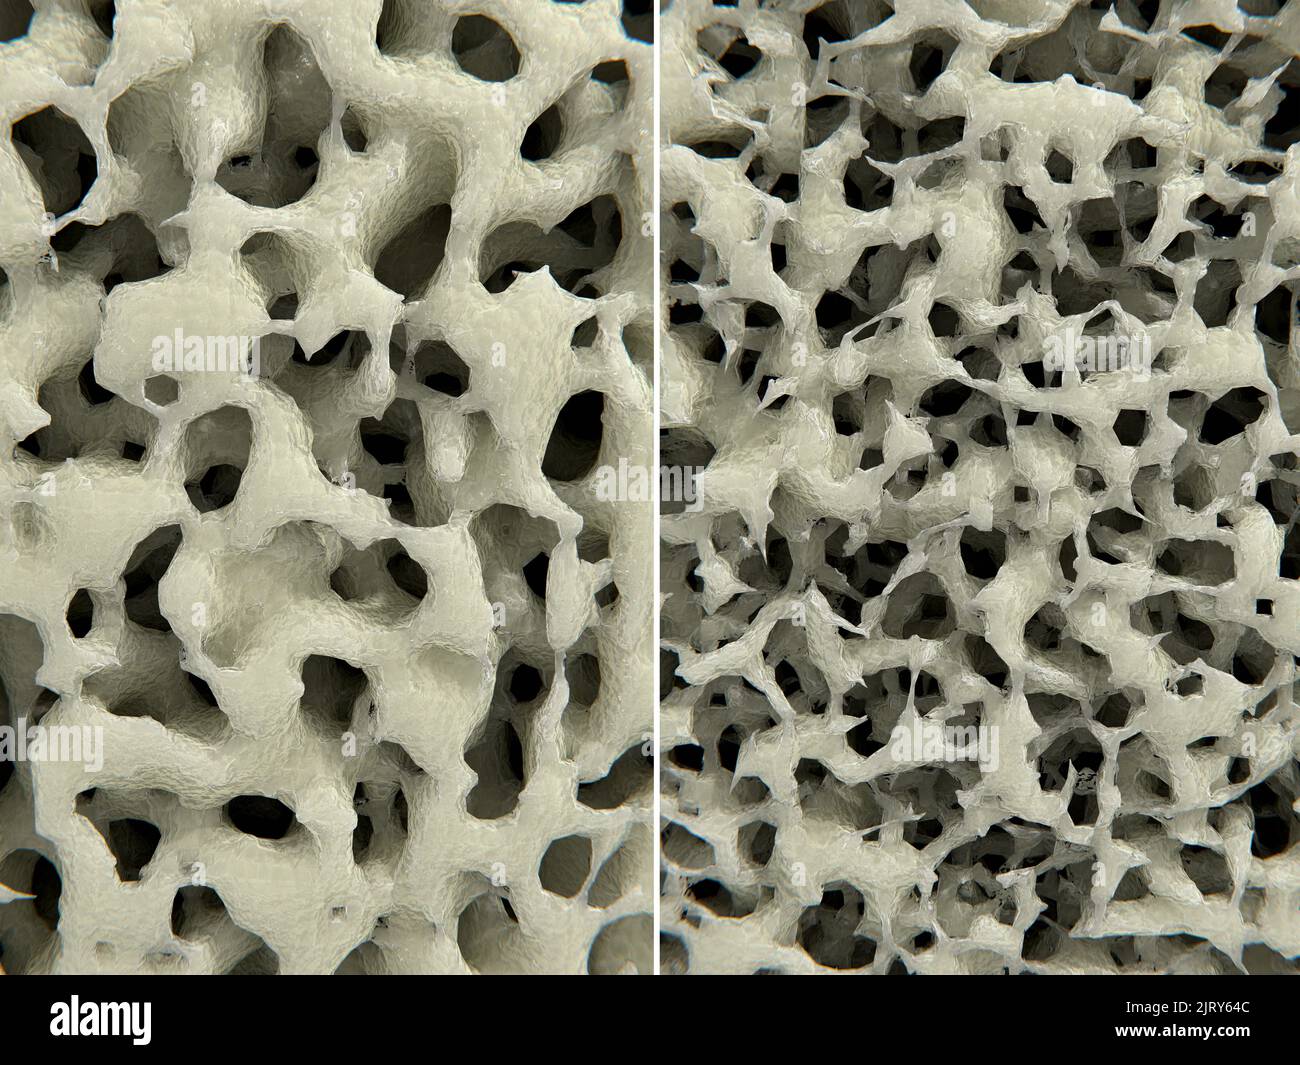 Healthy and osteoporotic bone tissue, illustration Stock Photo